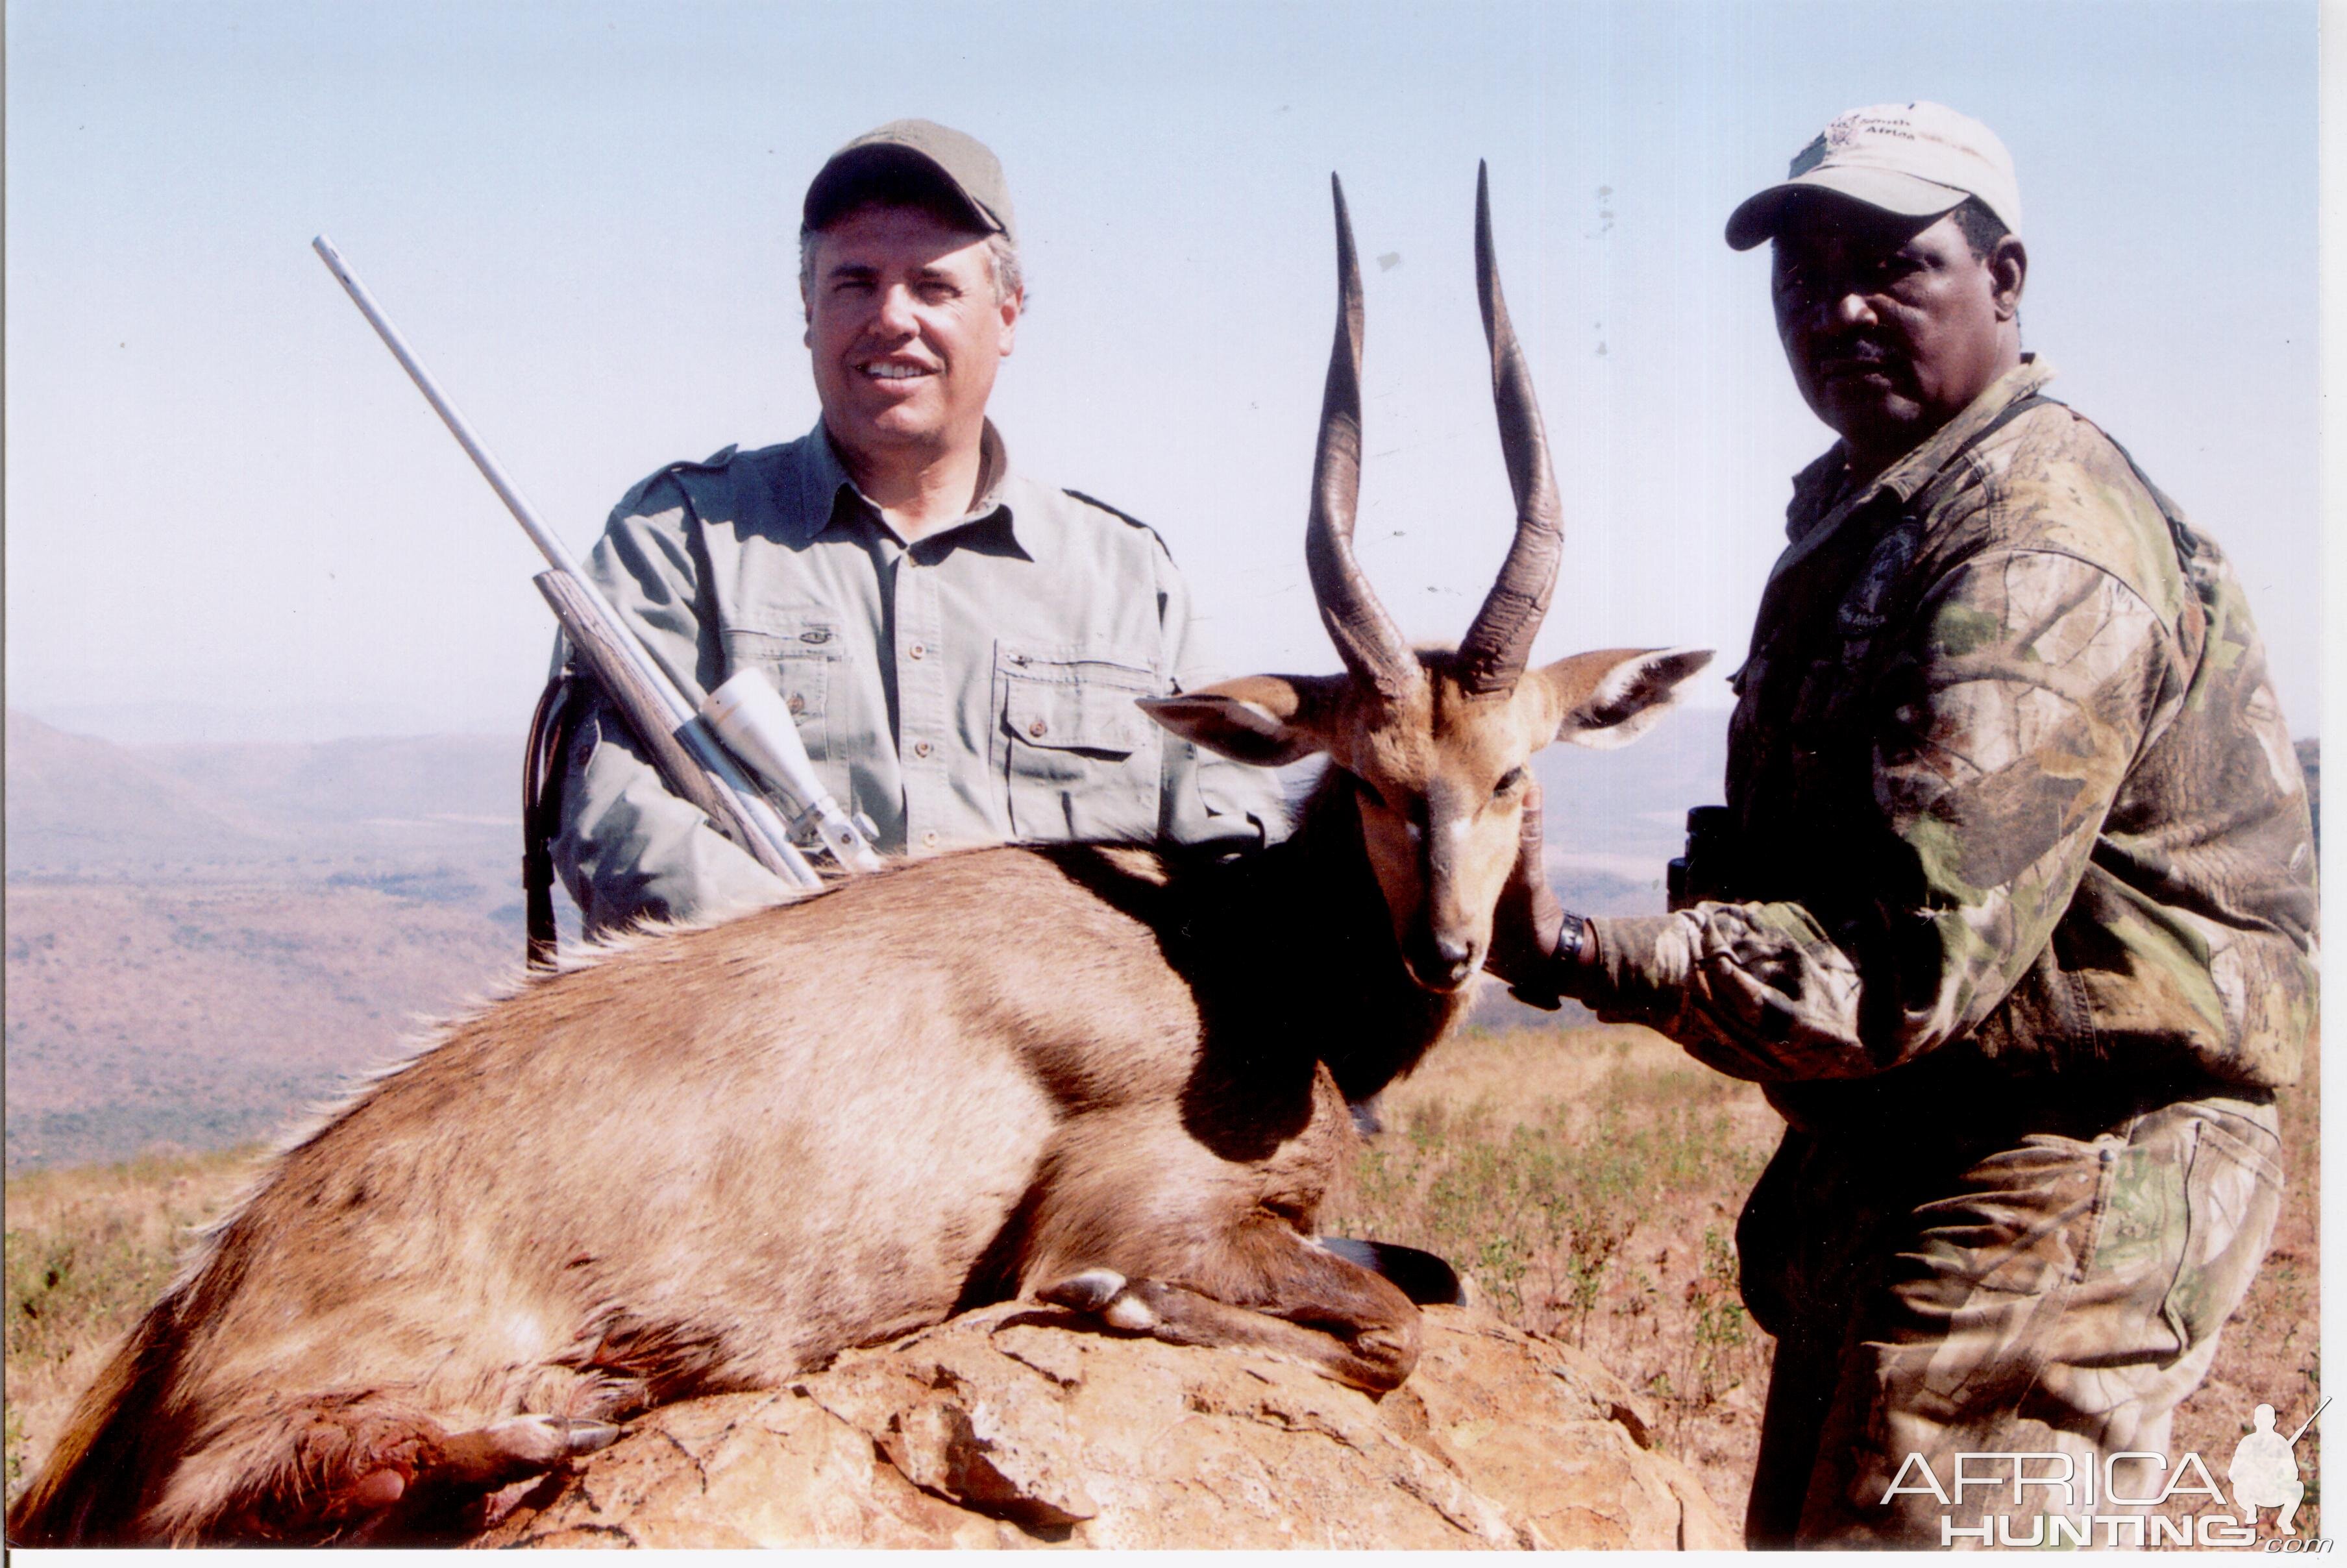 Hunting Bushbuck with Wintershoek Johnny Vivier Safaris in SA